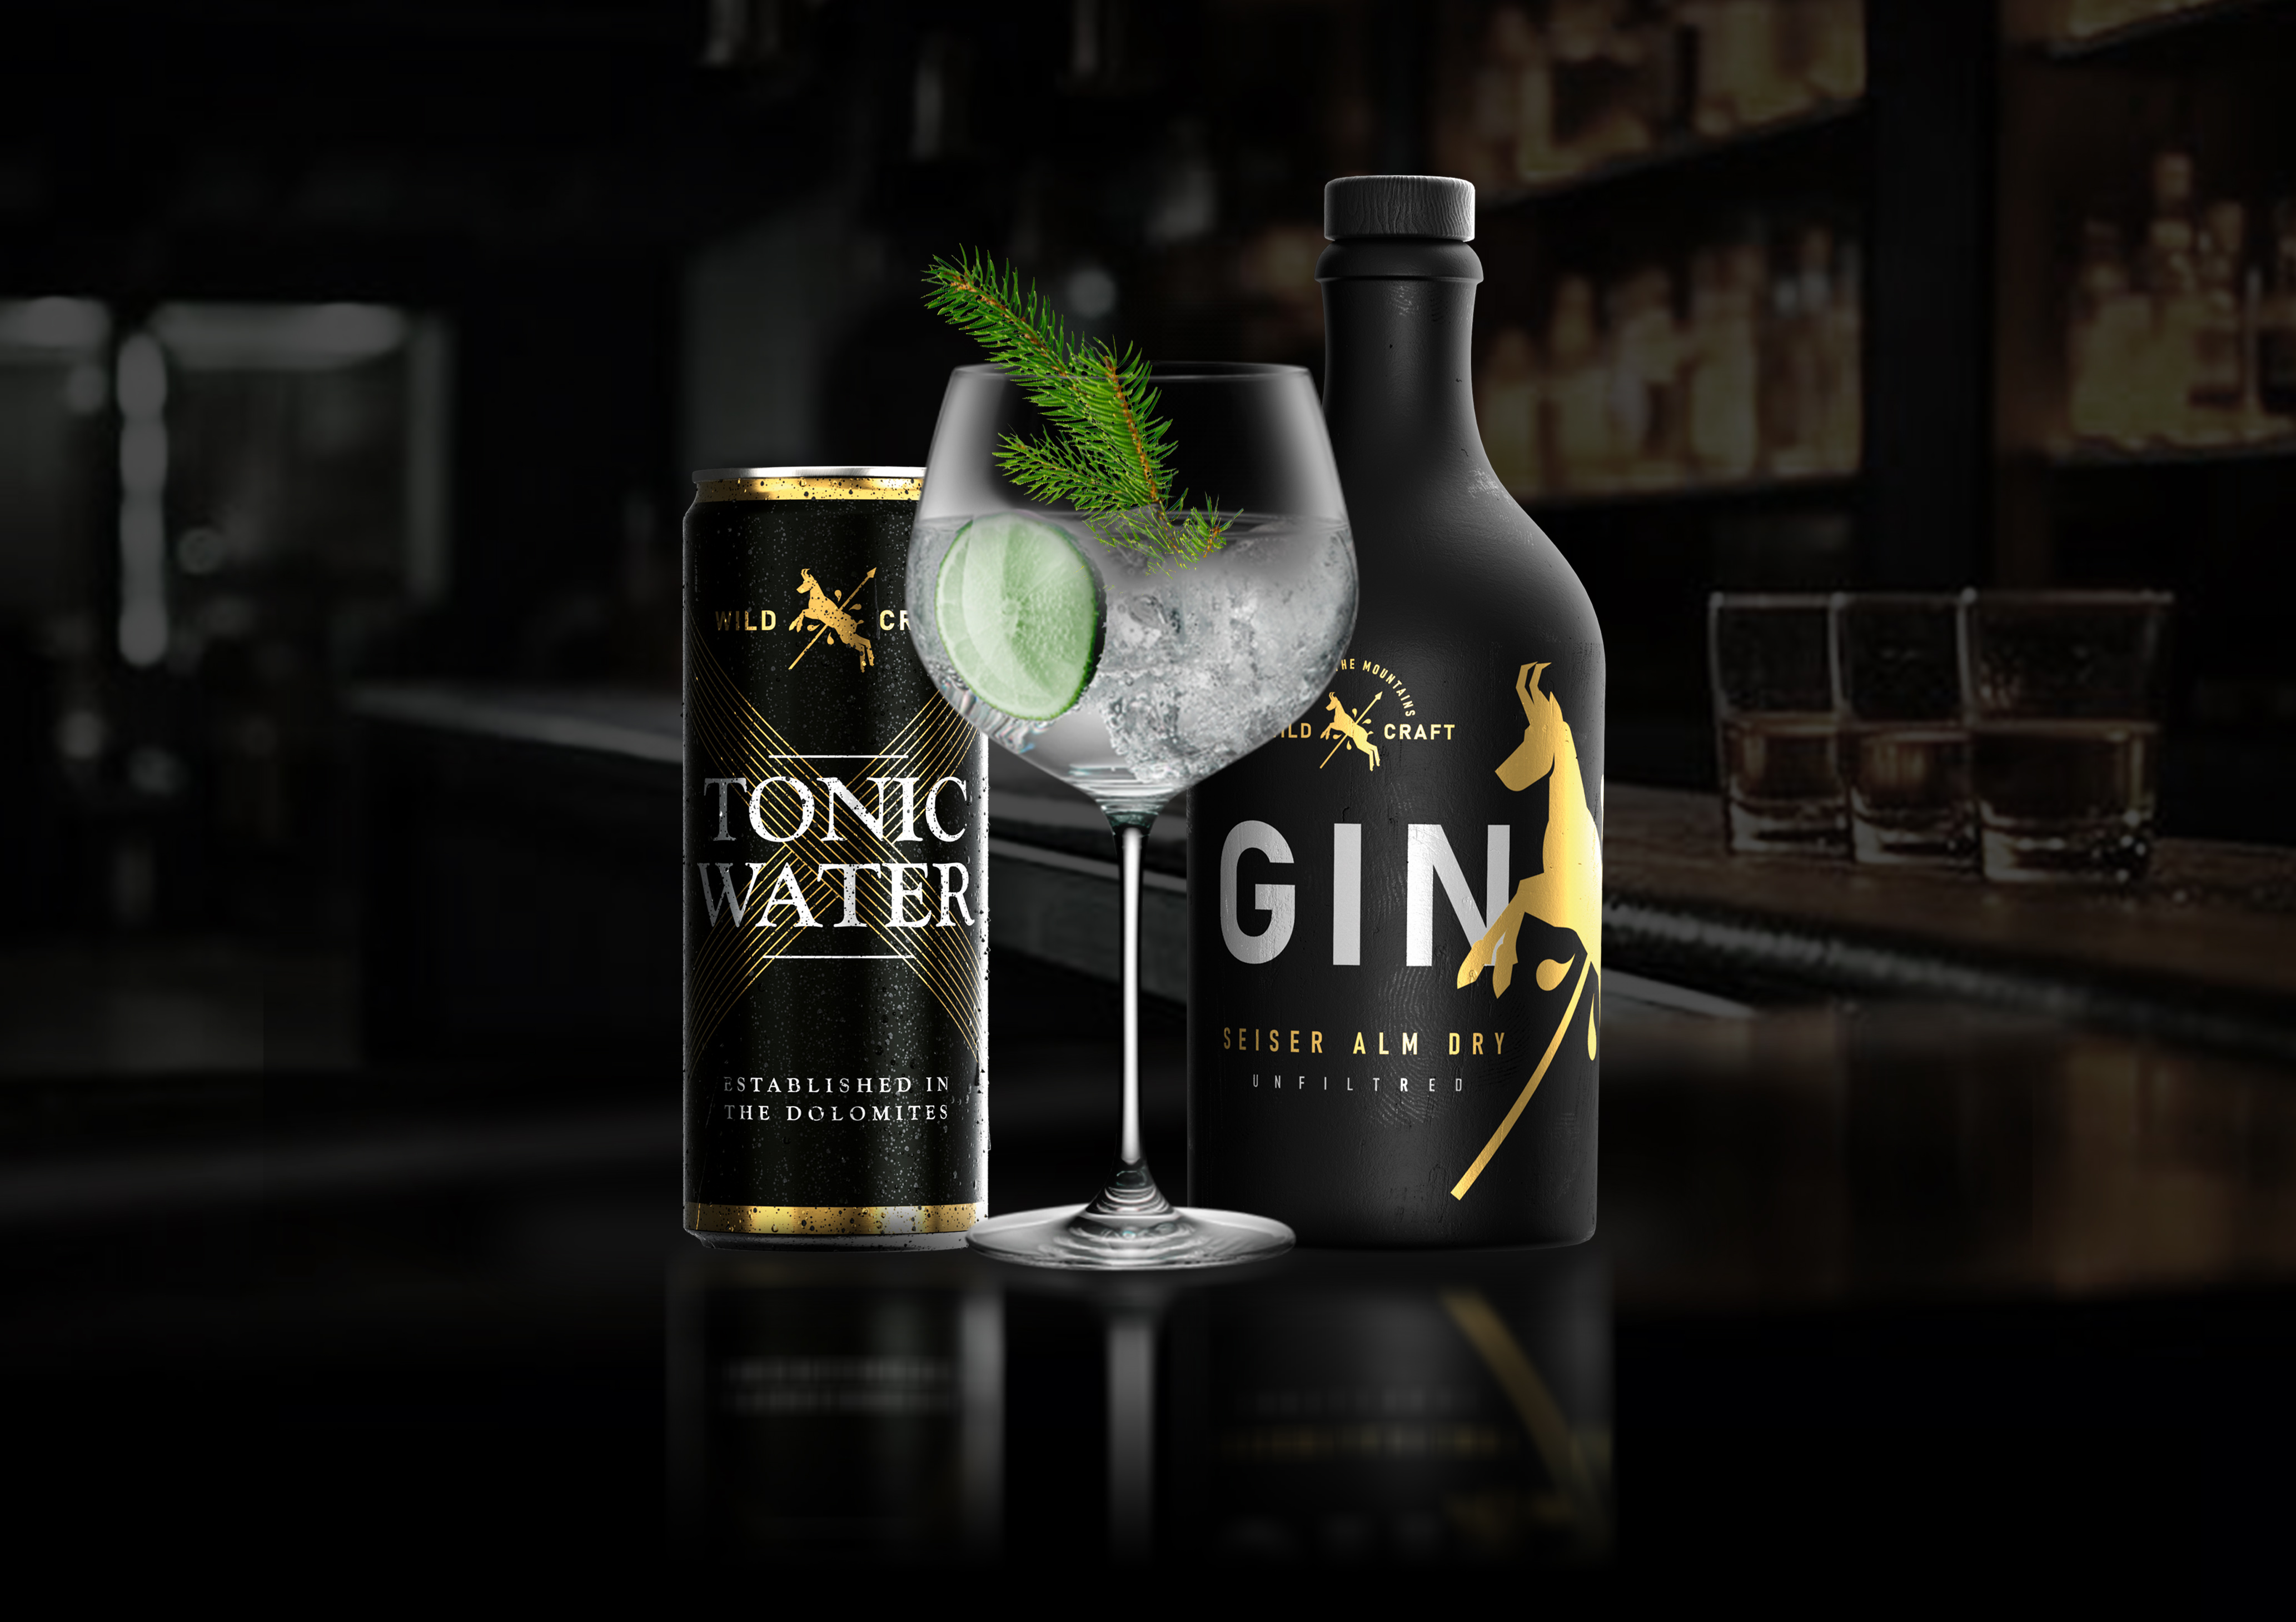 Gin Tonic Wild Craft